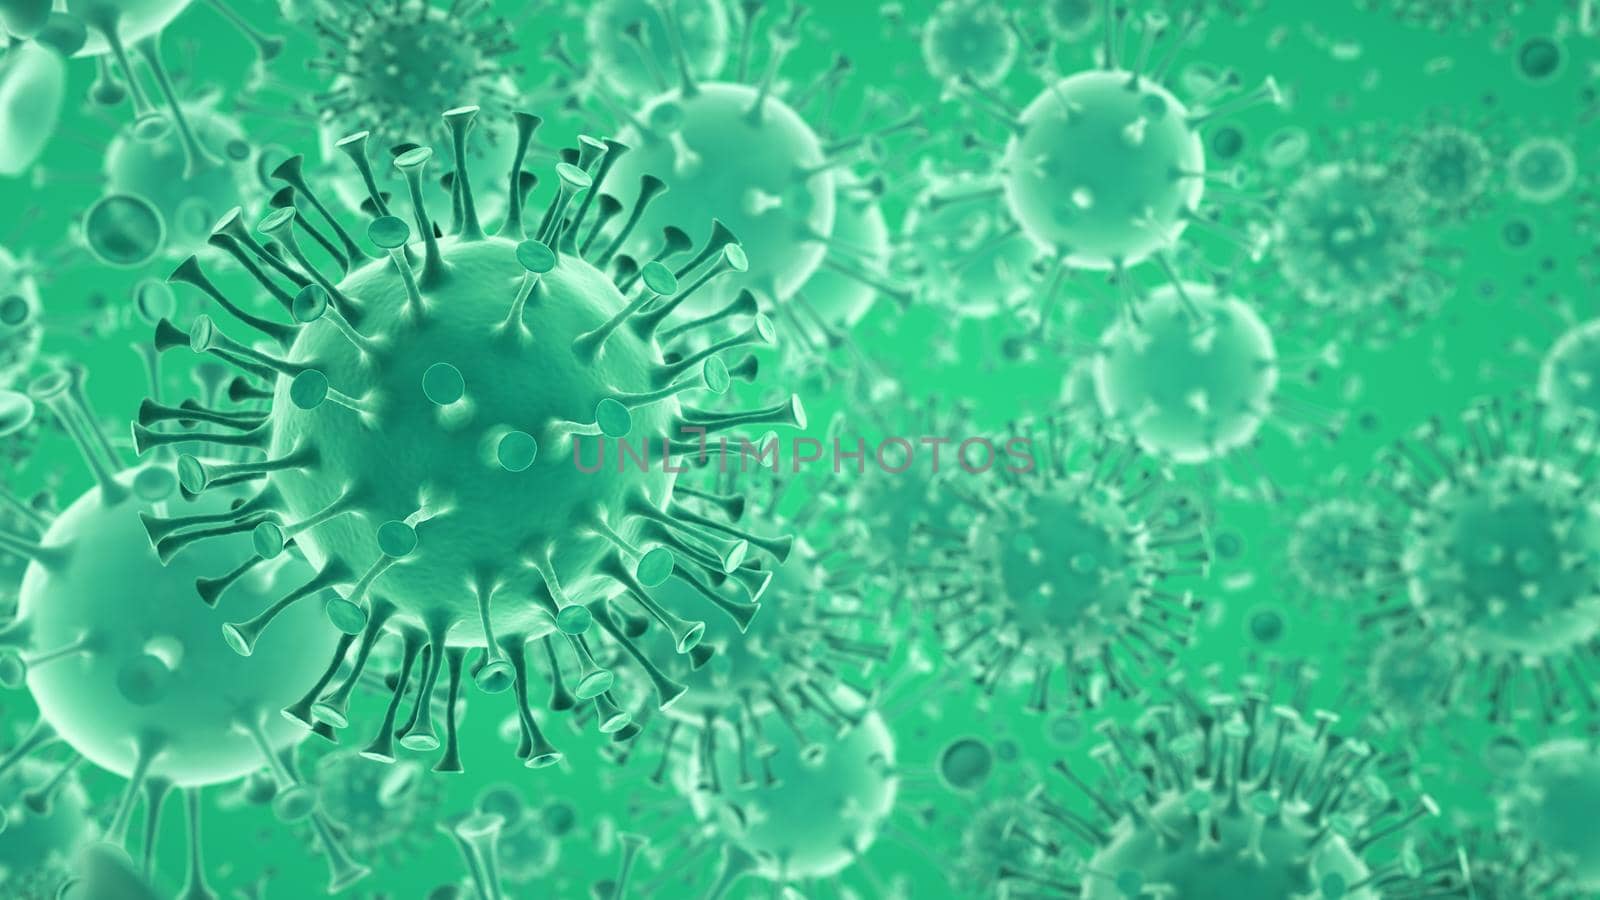 Covid-19 Coronavirus or 2019-nCoV cells and epidemic by Arsgera